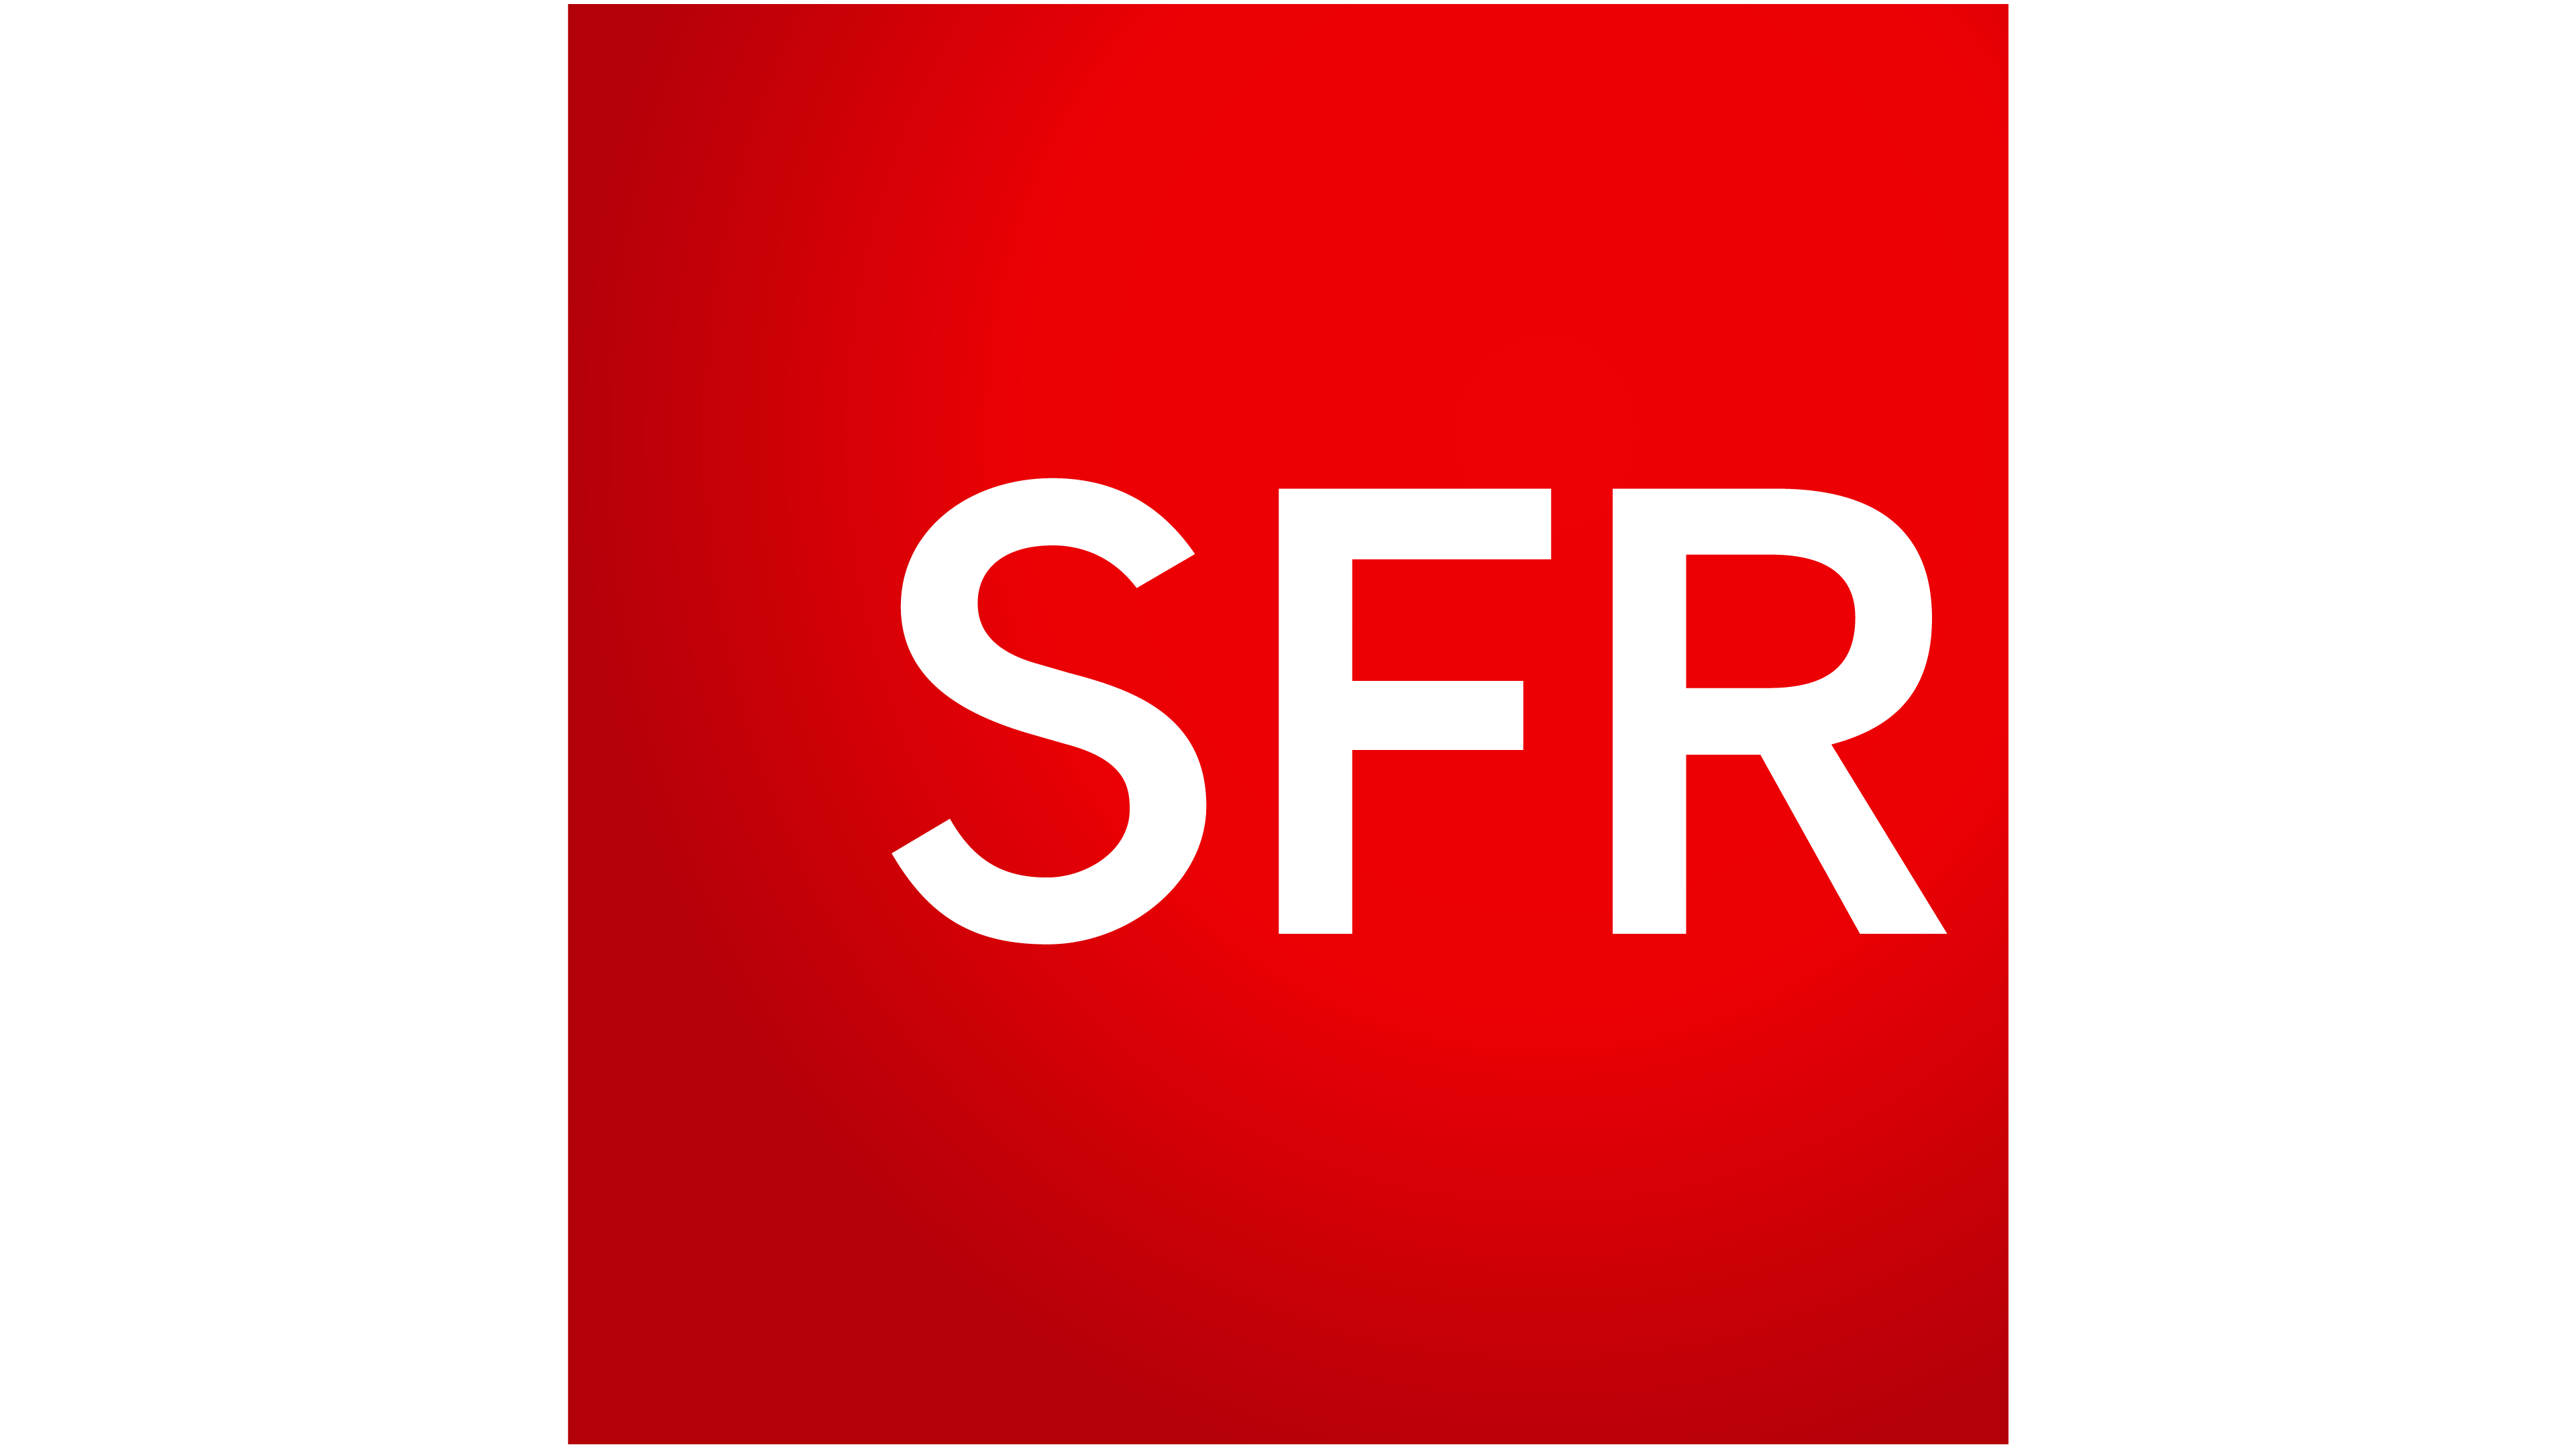 SFR. SFR logo. Логотип SFR цепи. Откройте сфр